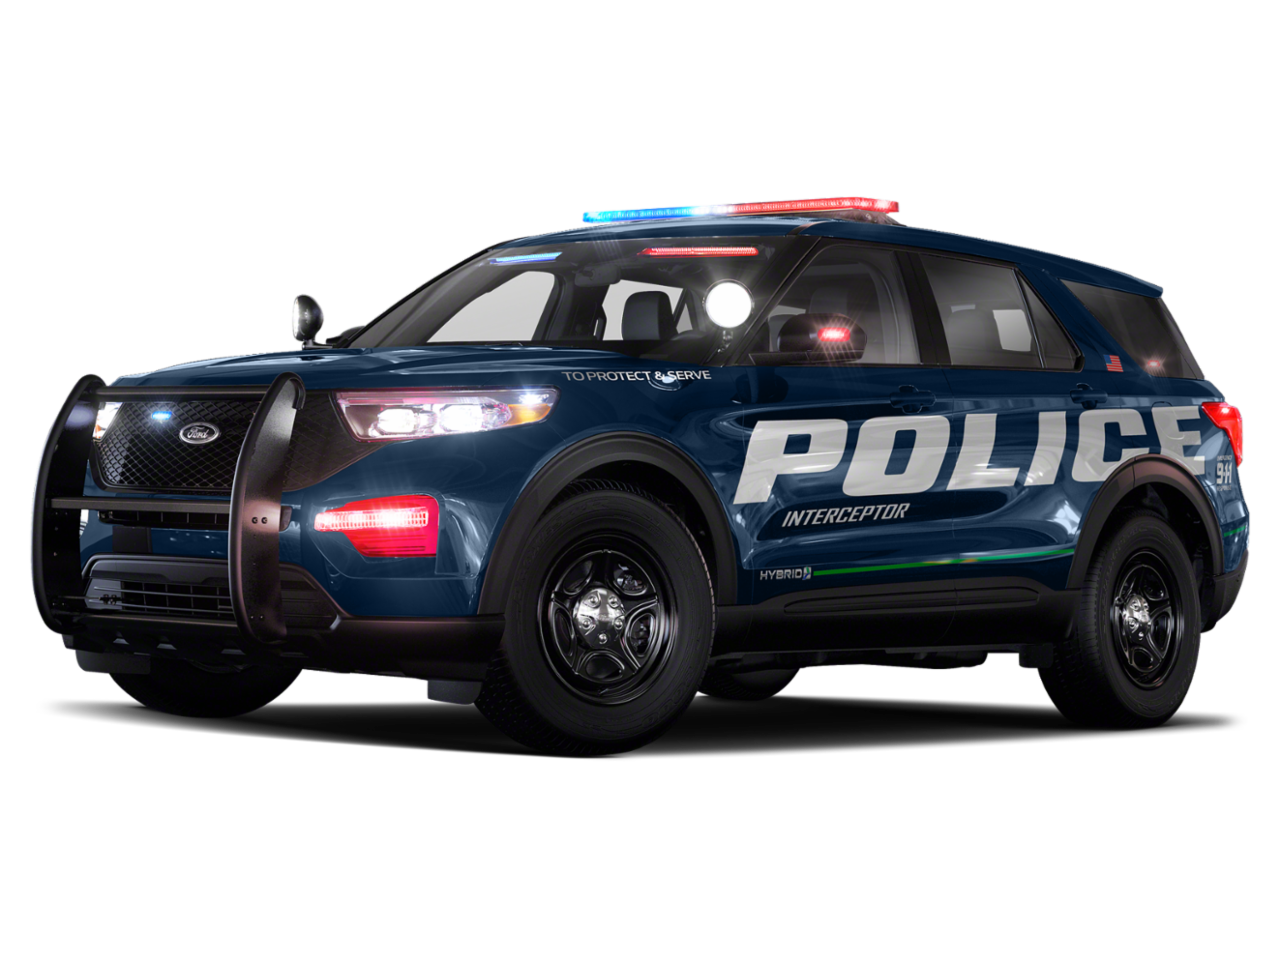 New Ford policeinterceptorutility at Webb Auto Group Serving Chicago